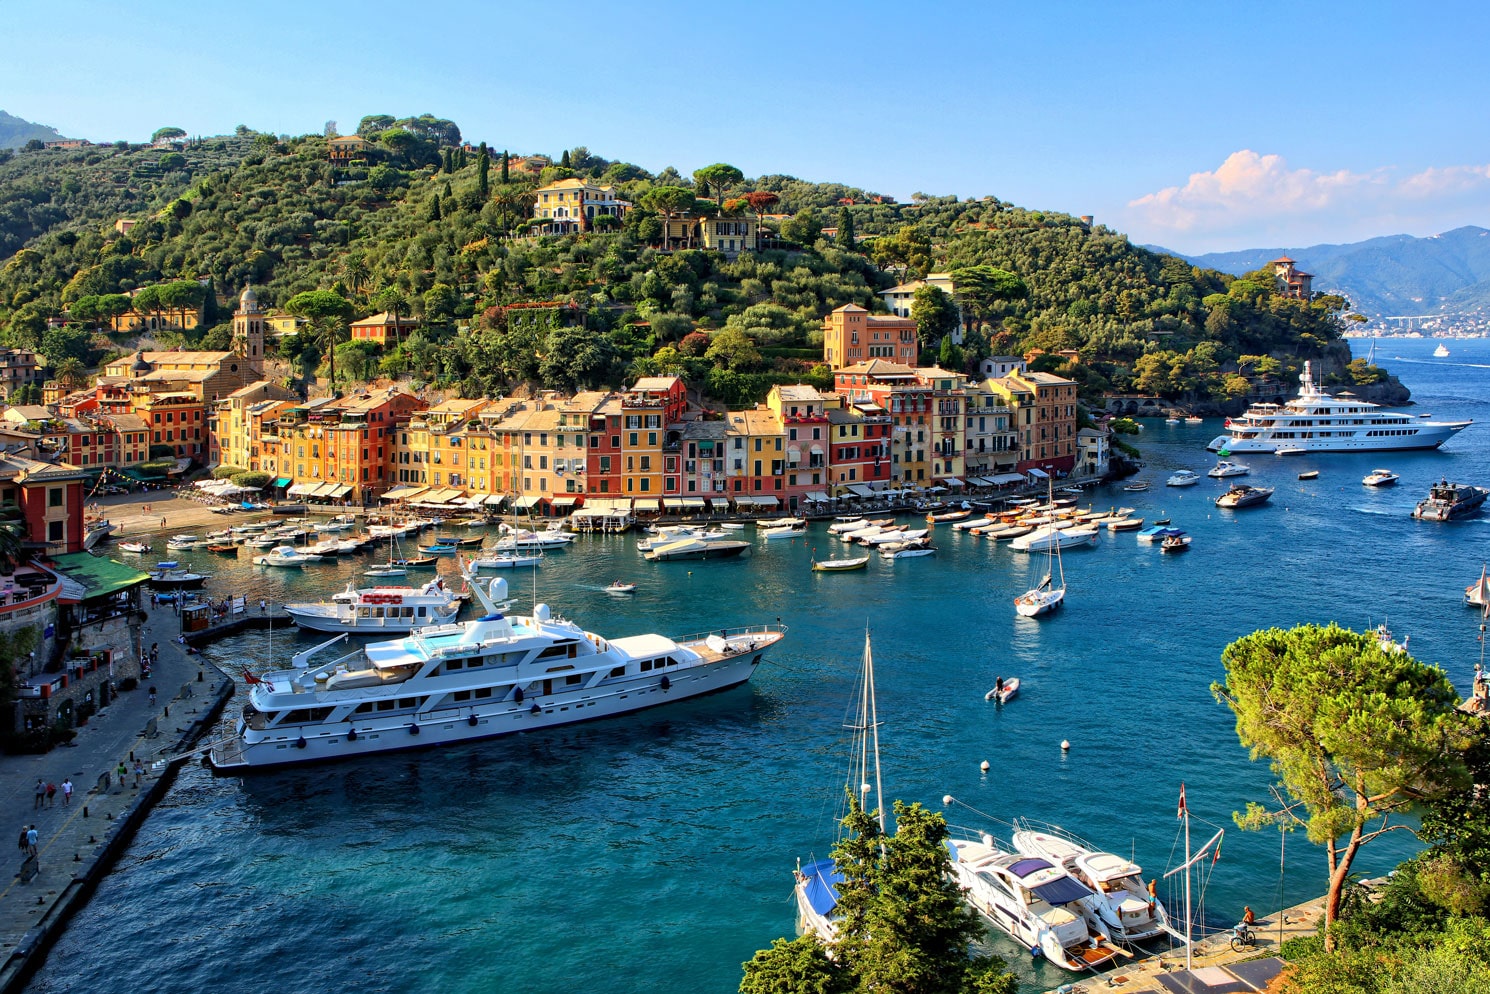 Portofino Italy Hotels: The Best Luxury and Boutique Hotels in Portofino